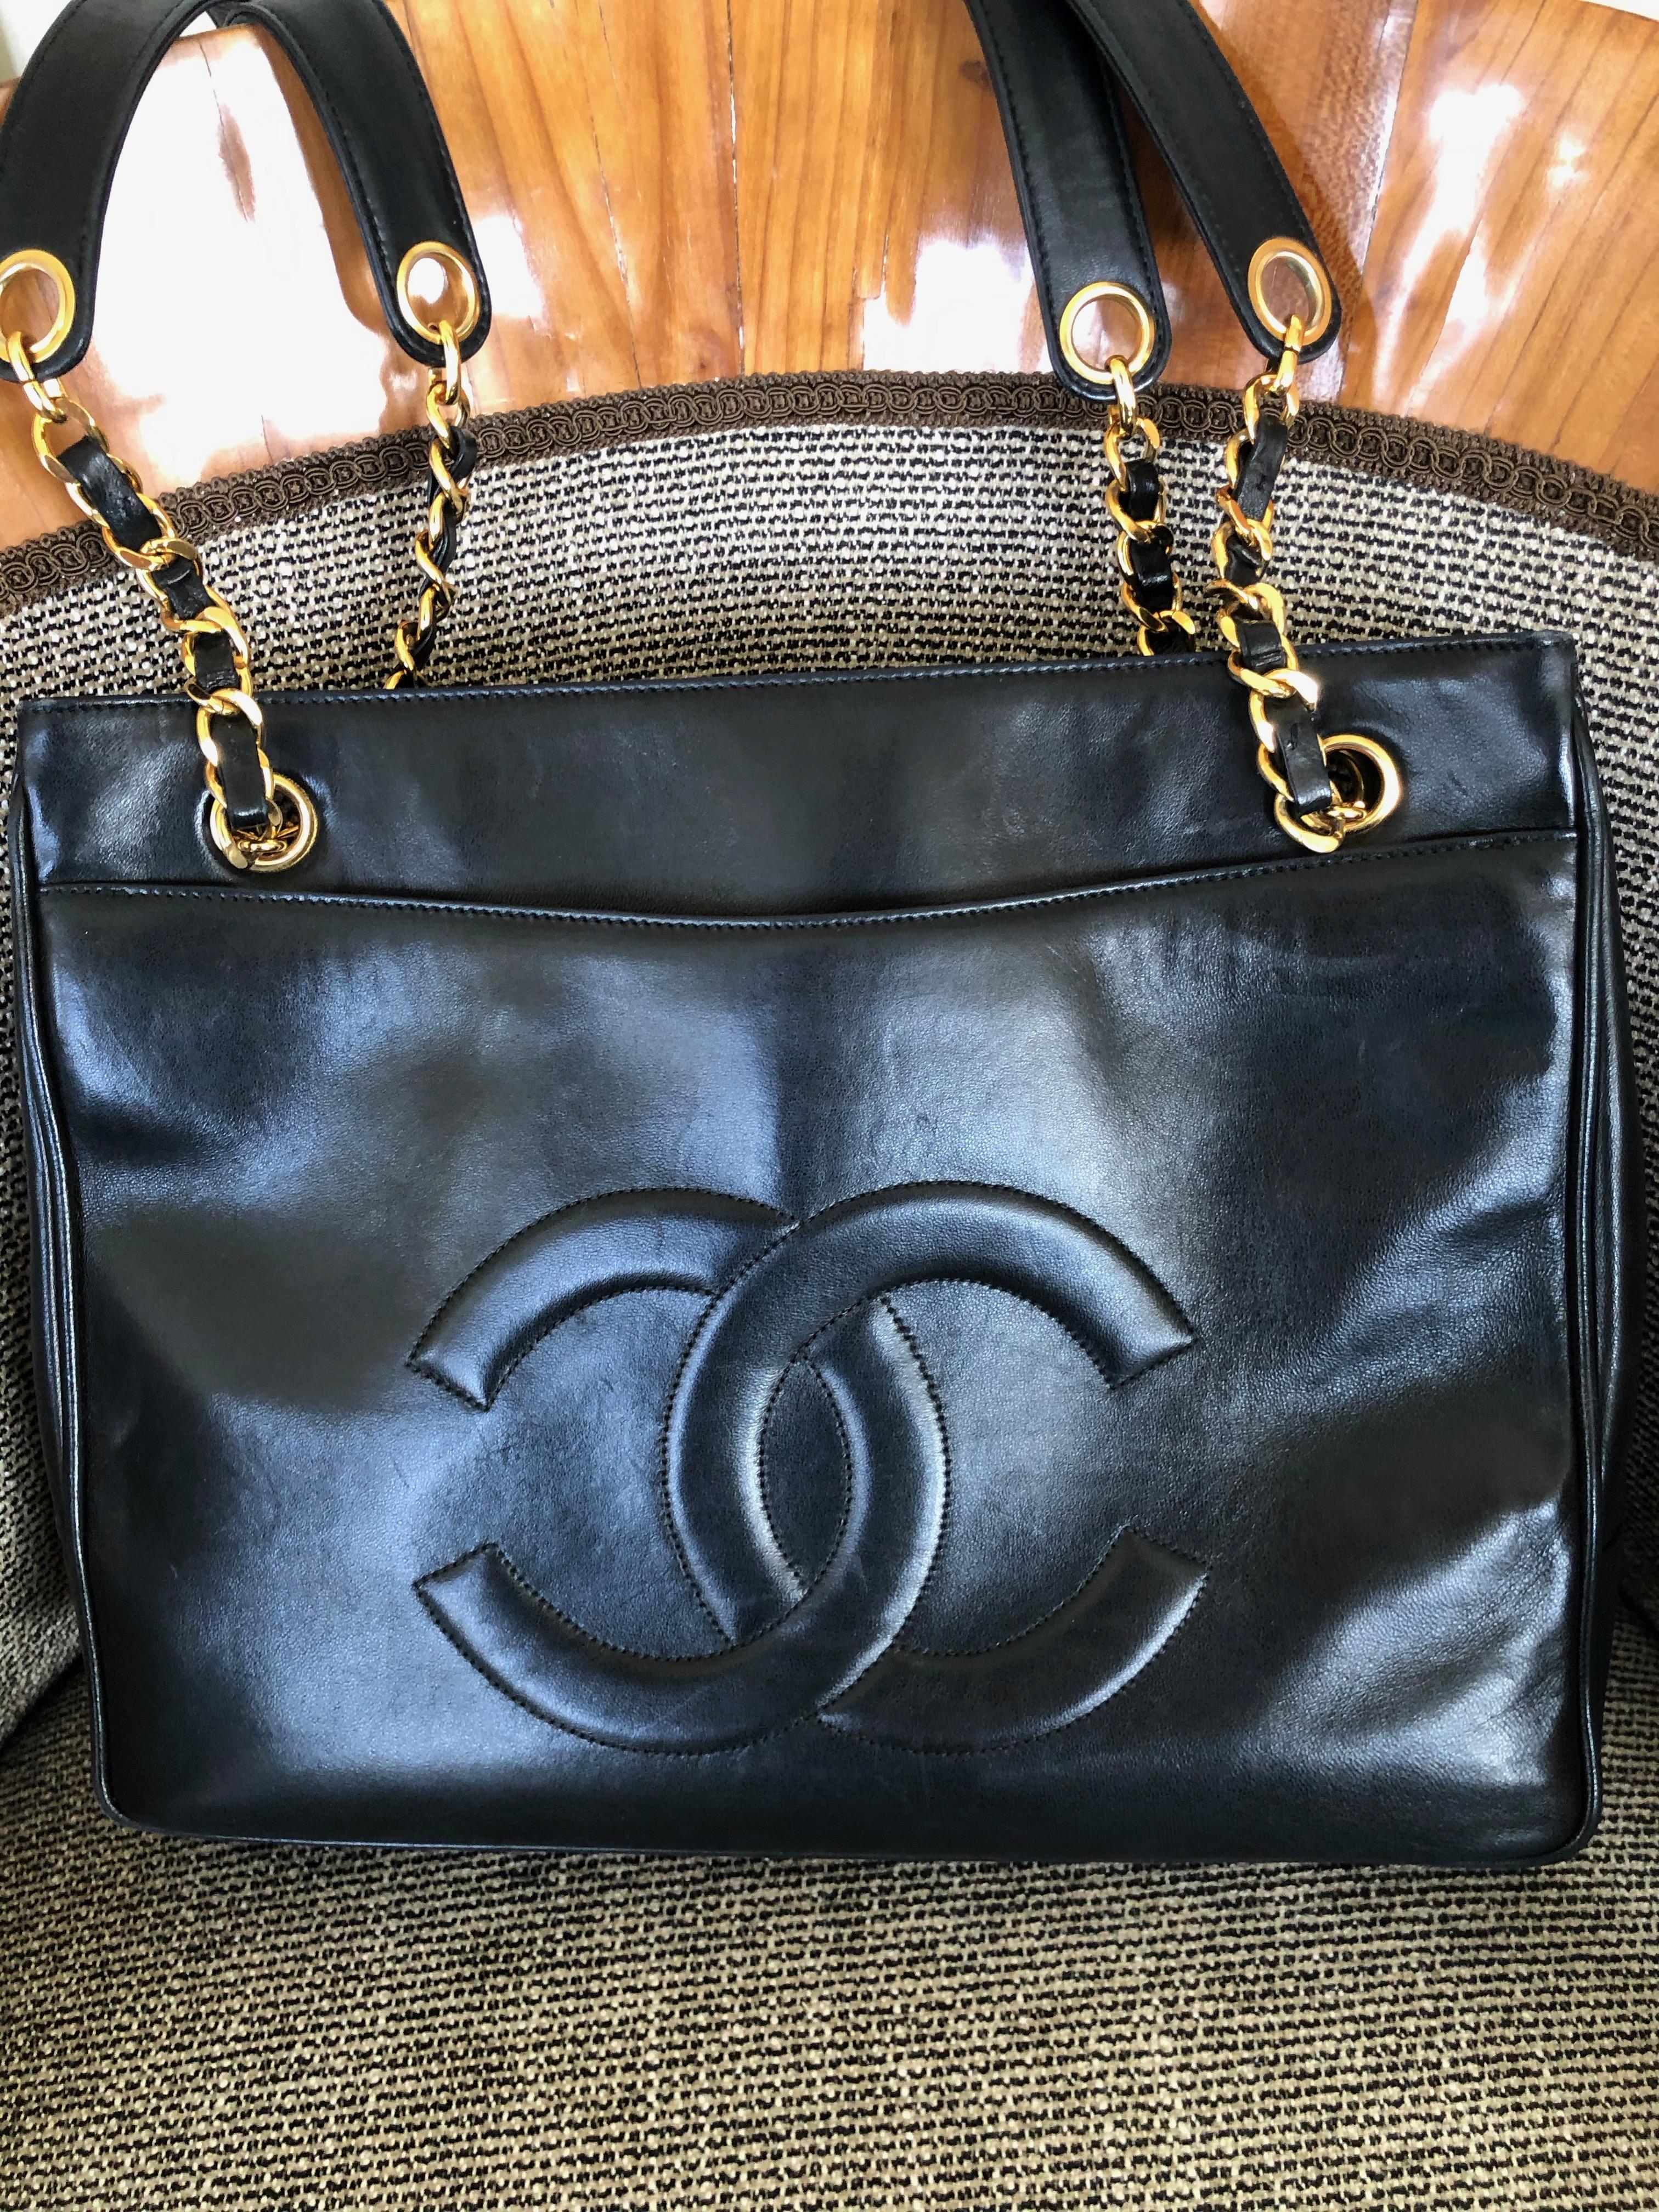 Chanel Large Vintage Black Leather Shopping Bag w Large CC Logo & Gold Hardware.
13